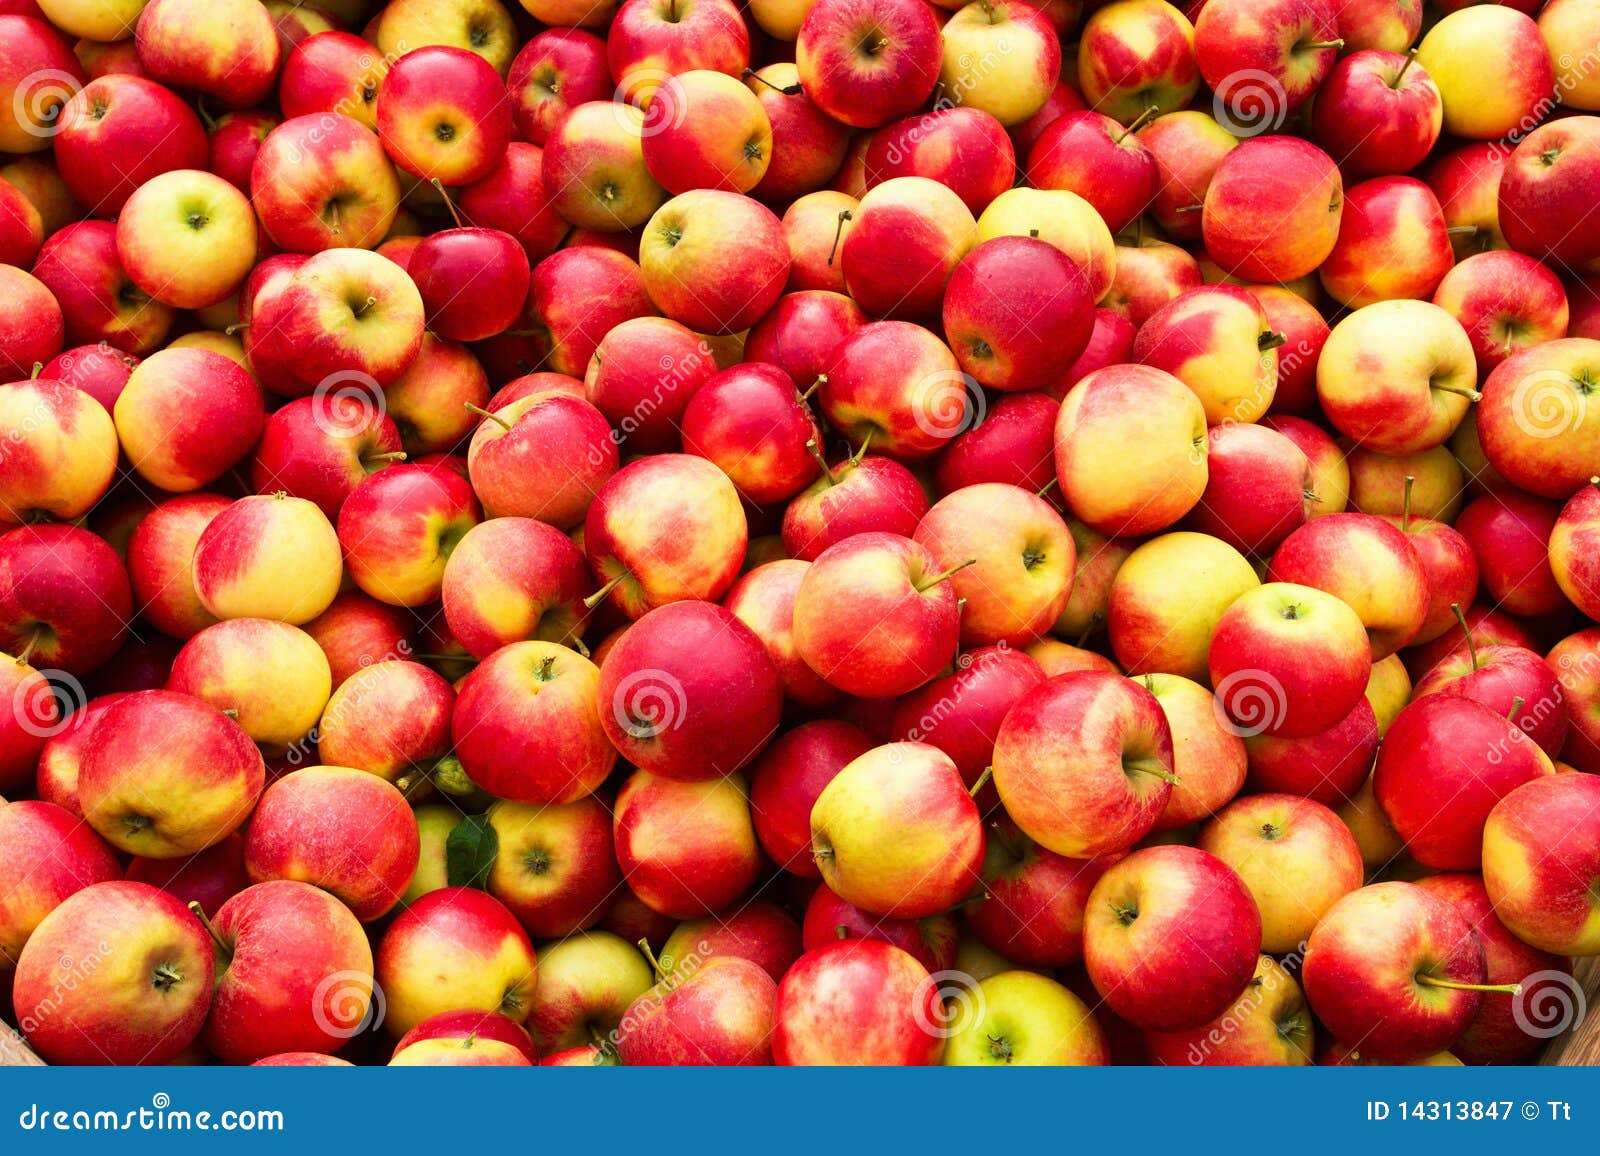 424,635 Red Apple Stock Photos - Free & Royalty-Free Stock Photos